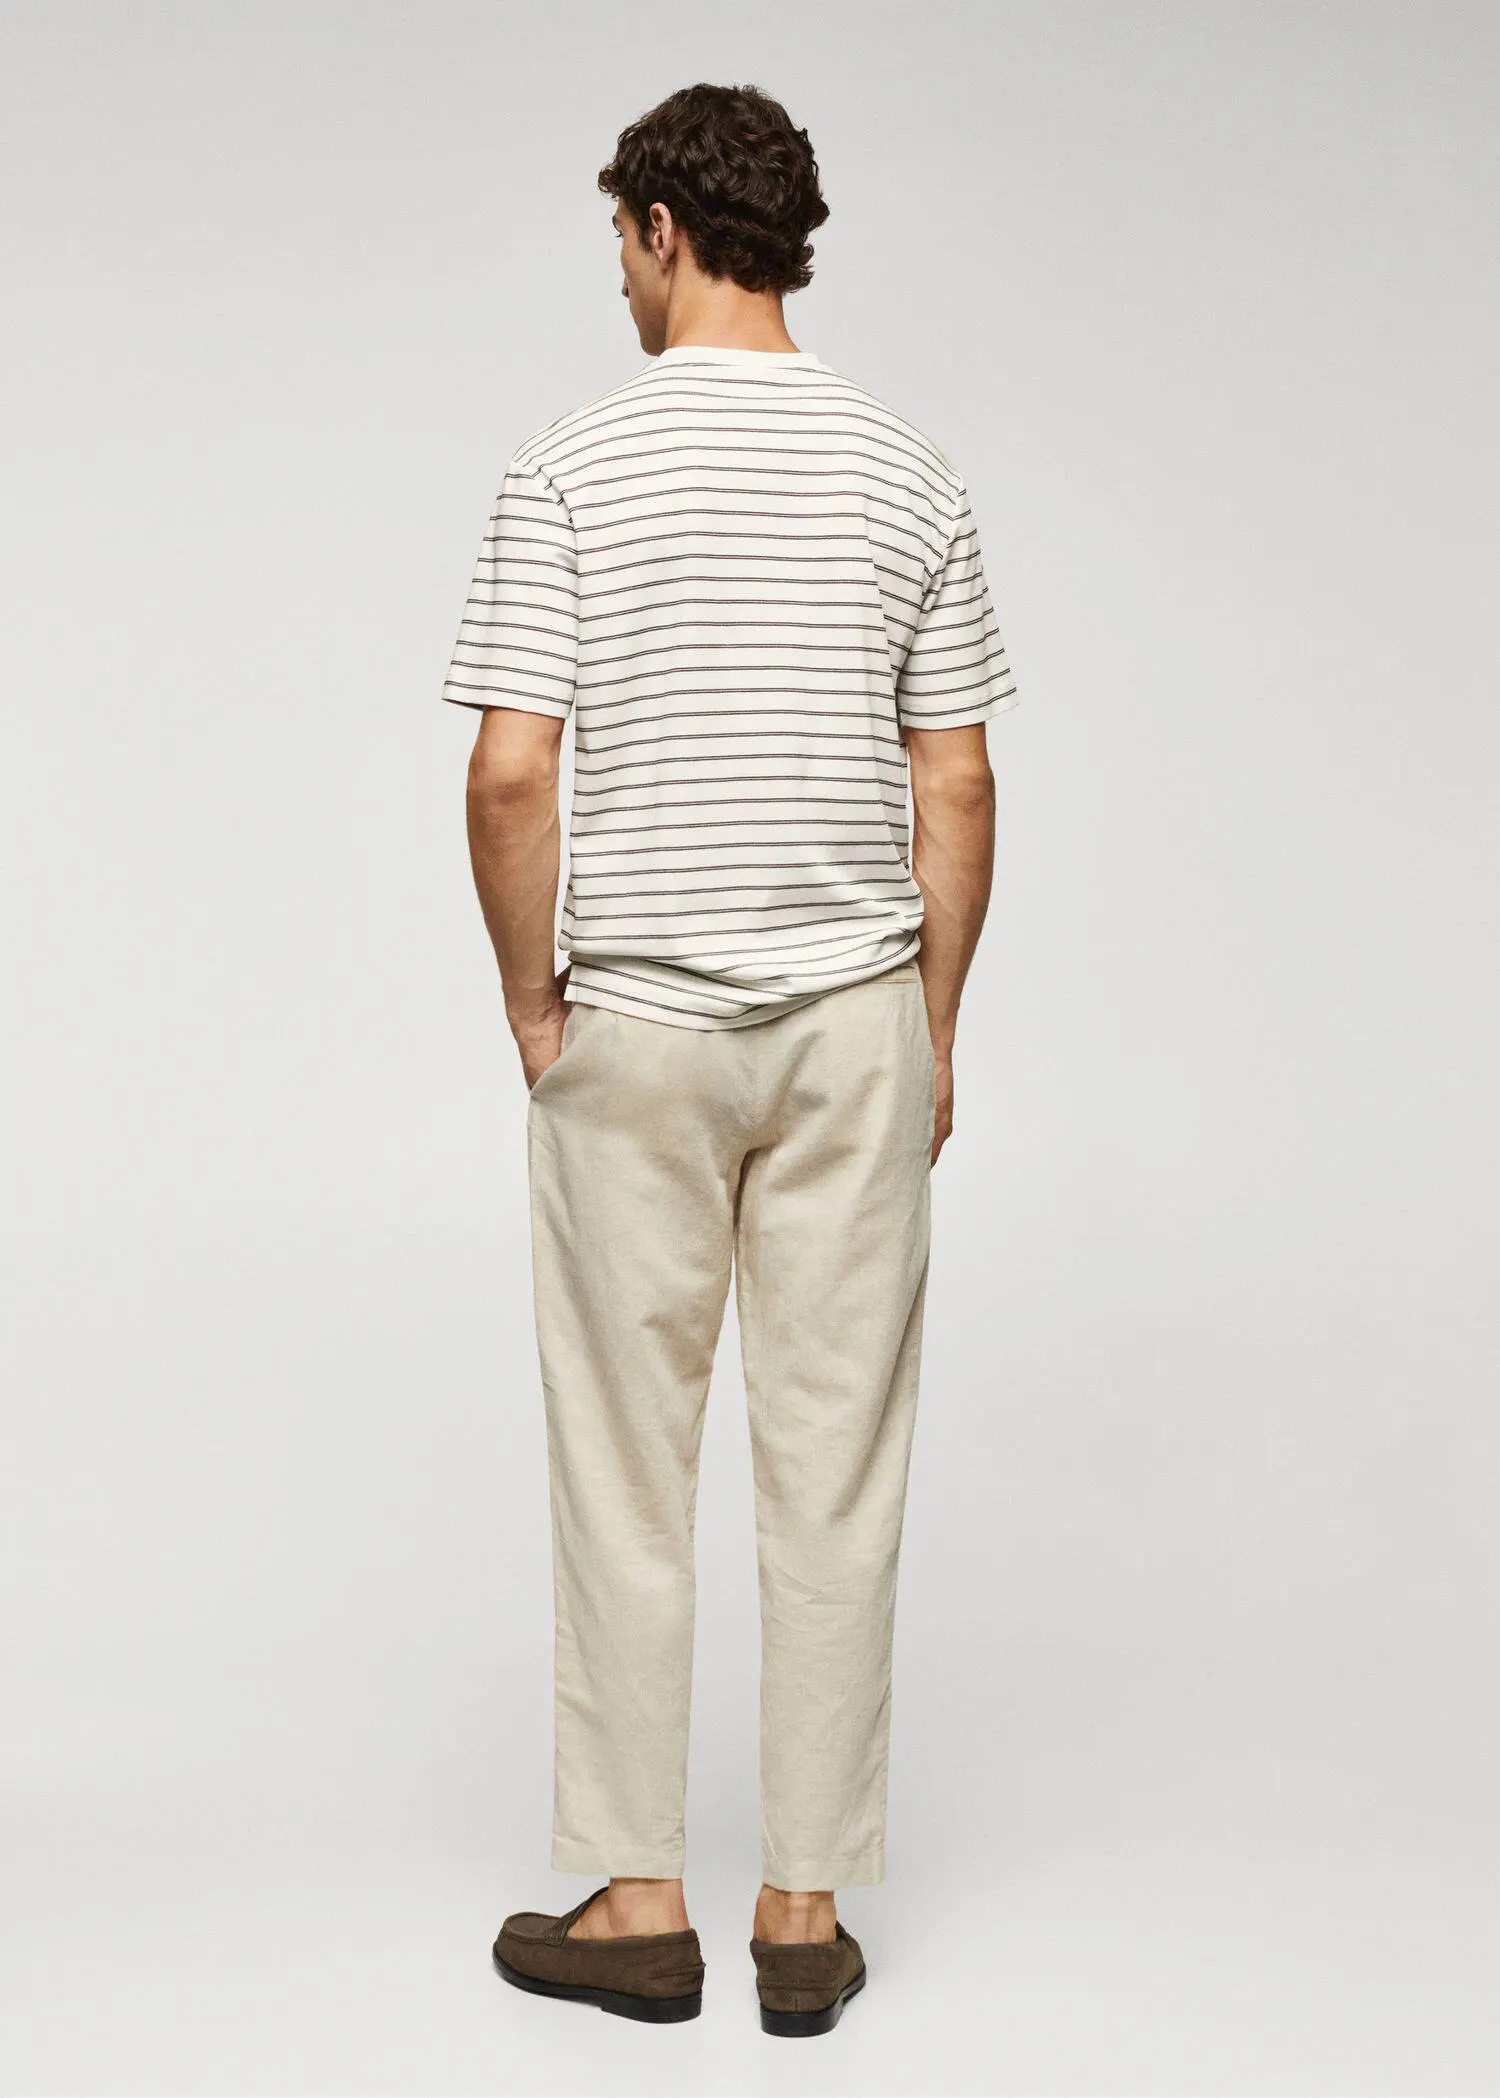 Mango Striped 100% cotton t-shirt. a man wearing a striped shirt and beige pants. 